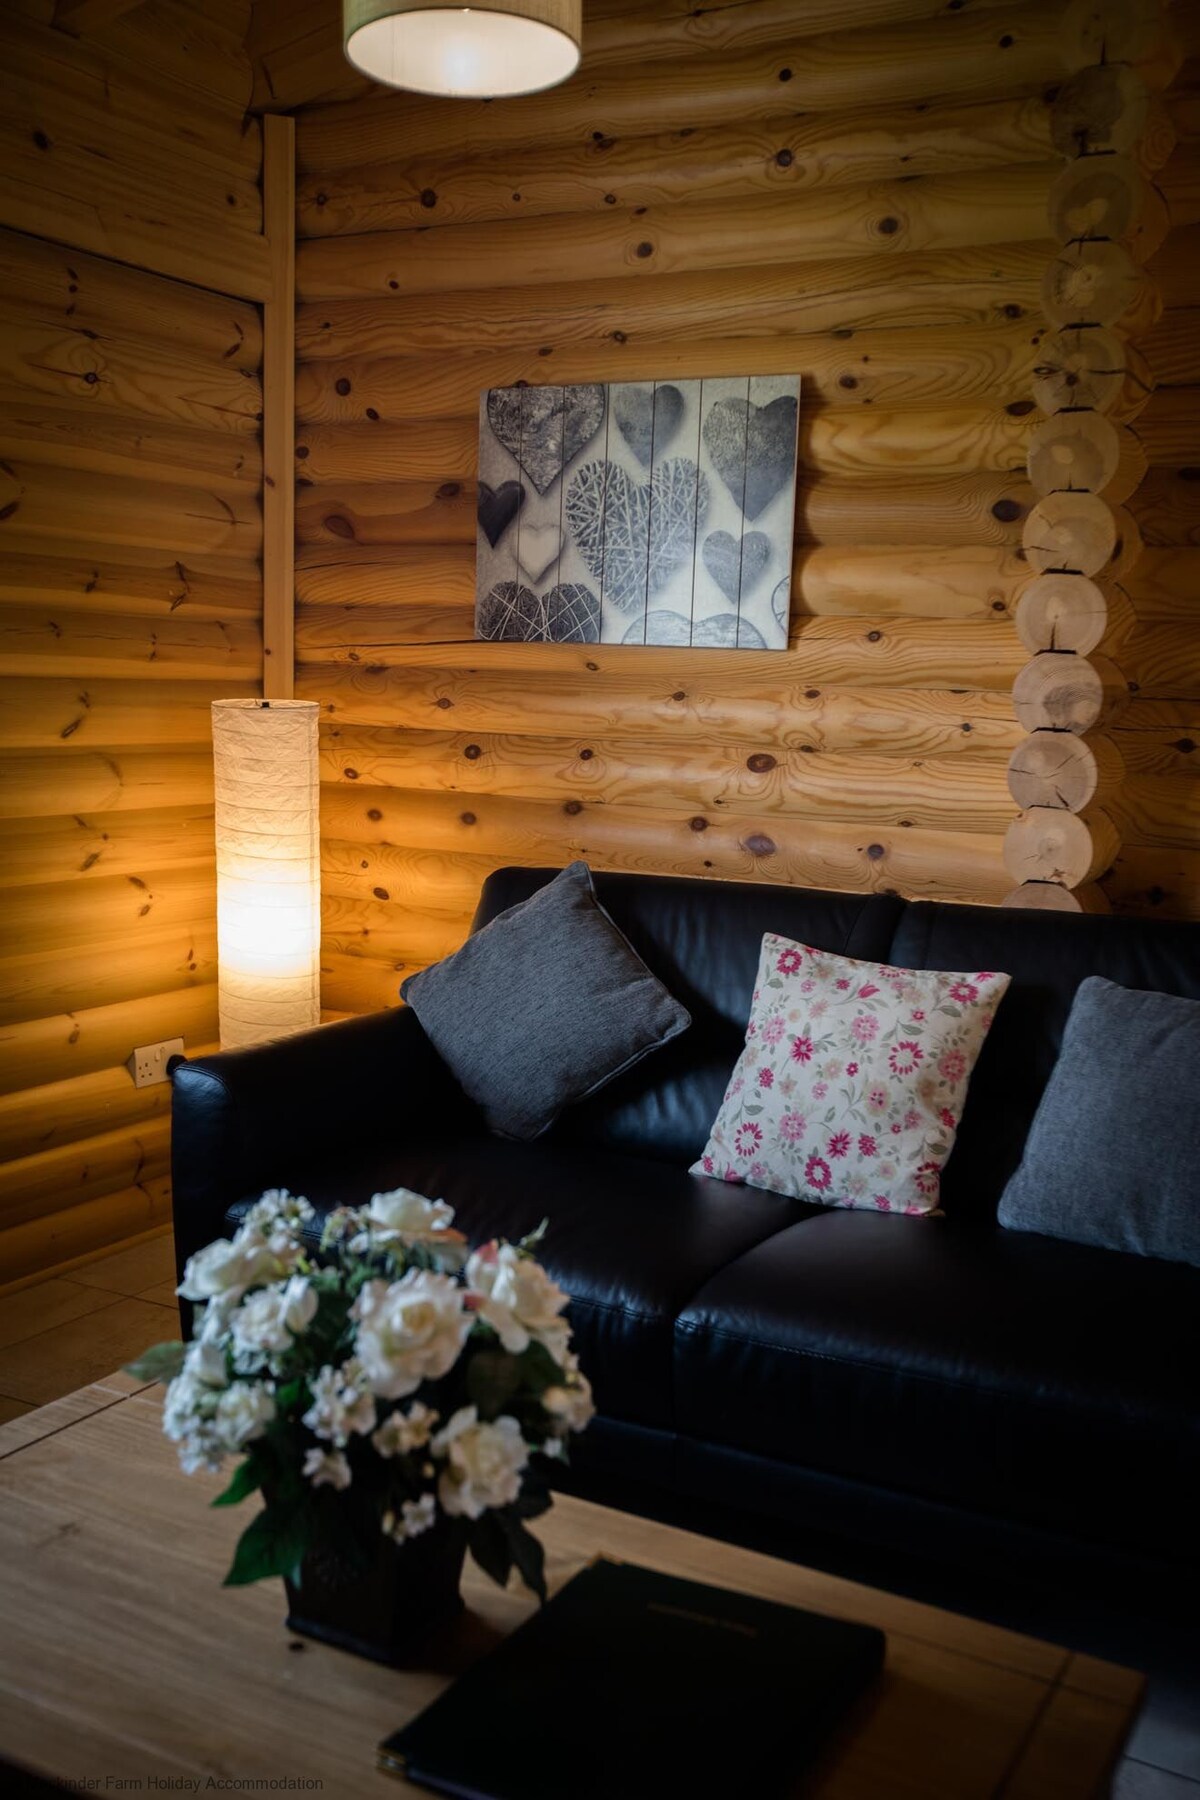 Quail Lodge - Nordic Log Cabin